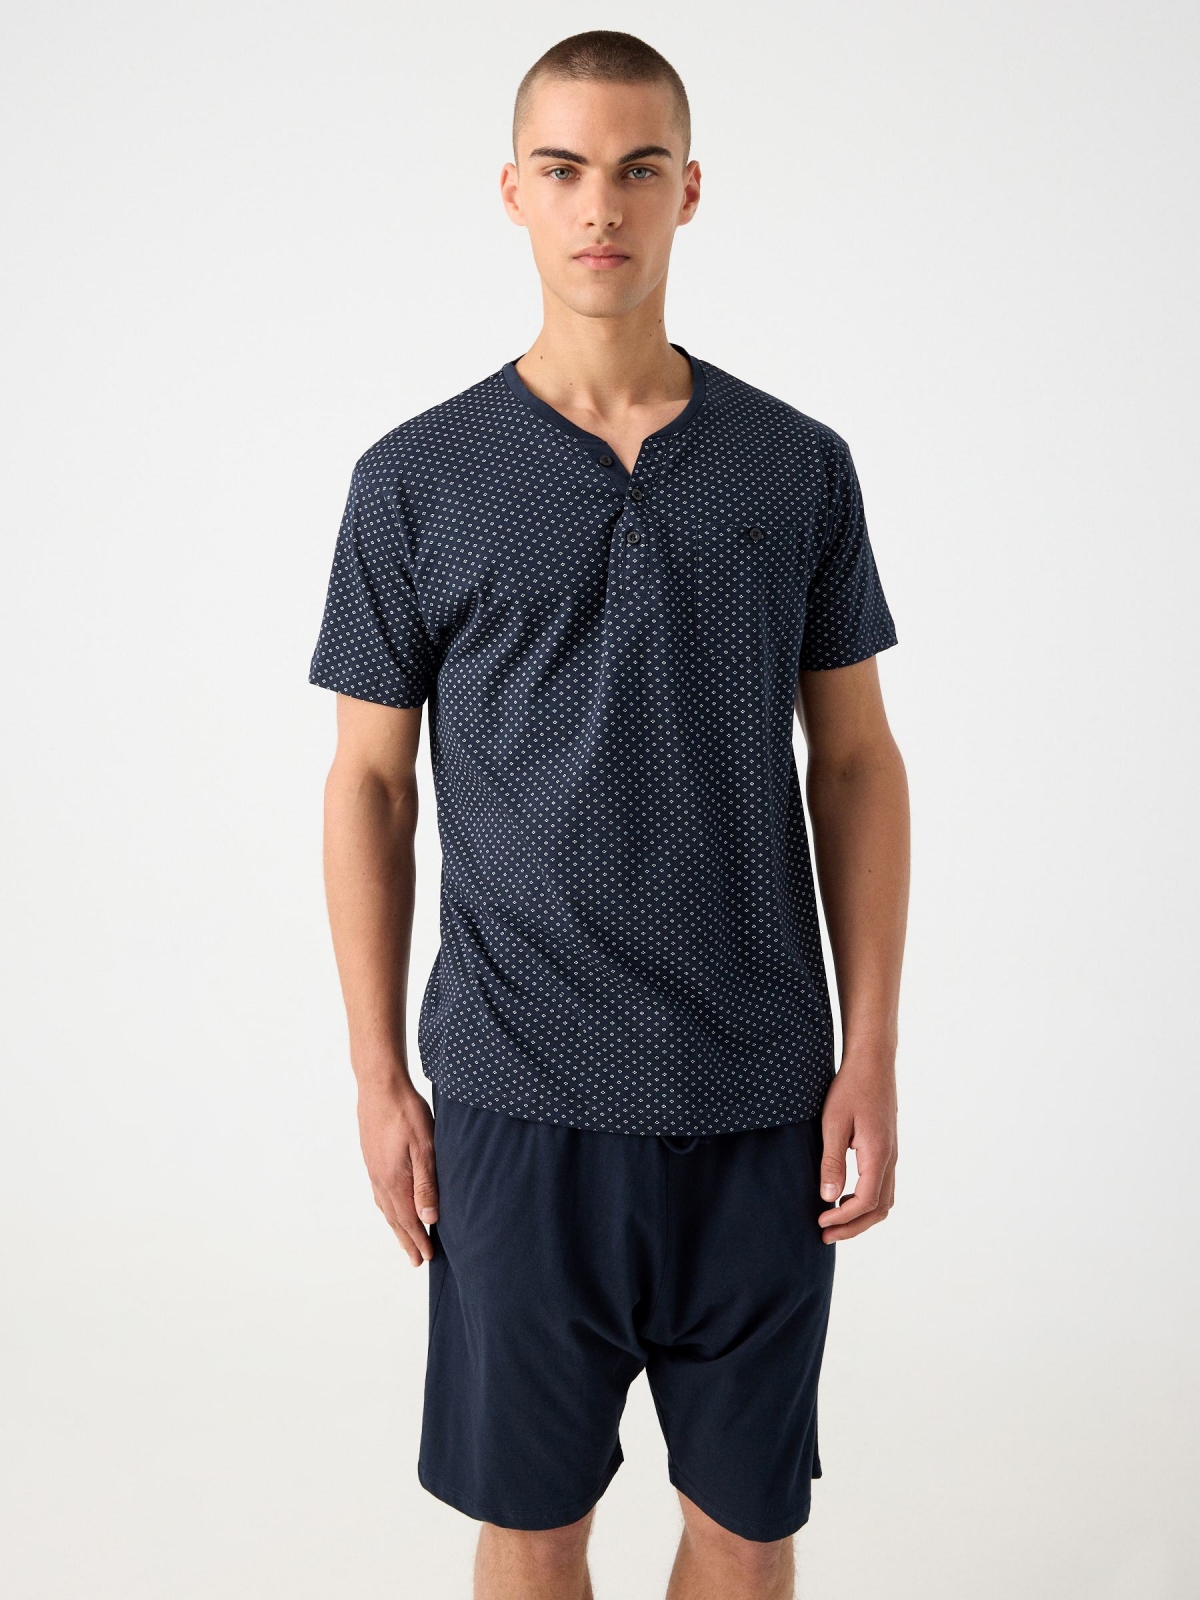 Pijama corto print motivos azul marino vista media frontal